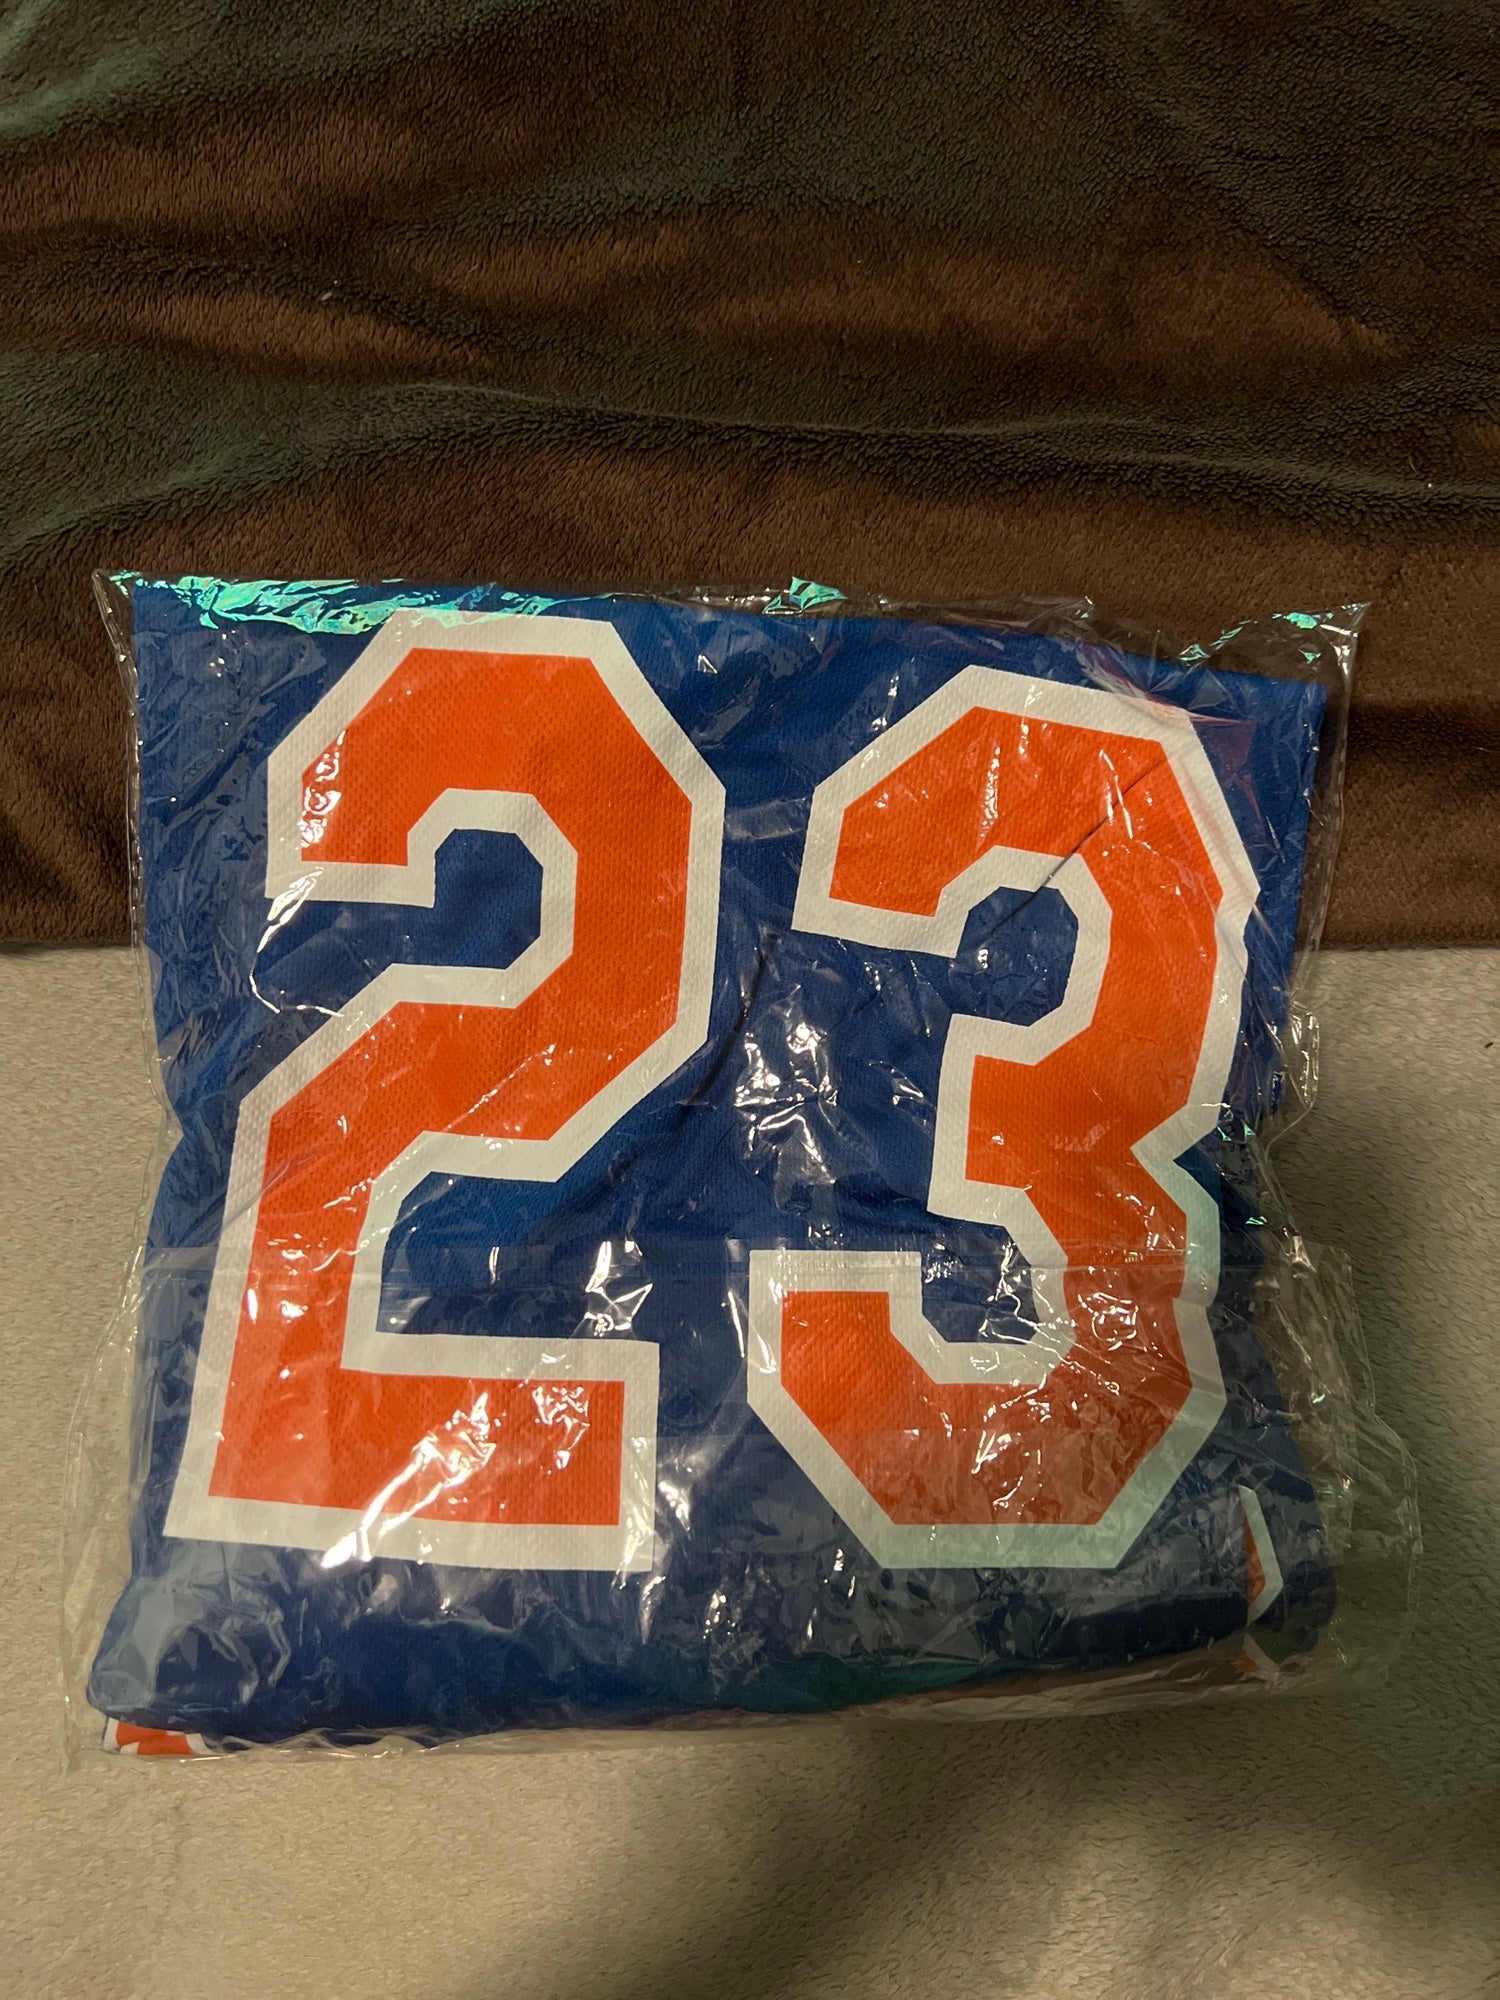 2023 New York Mets Number 23 Mets Football Jersey Shirt Giveaways